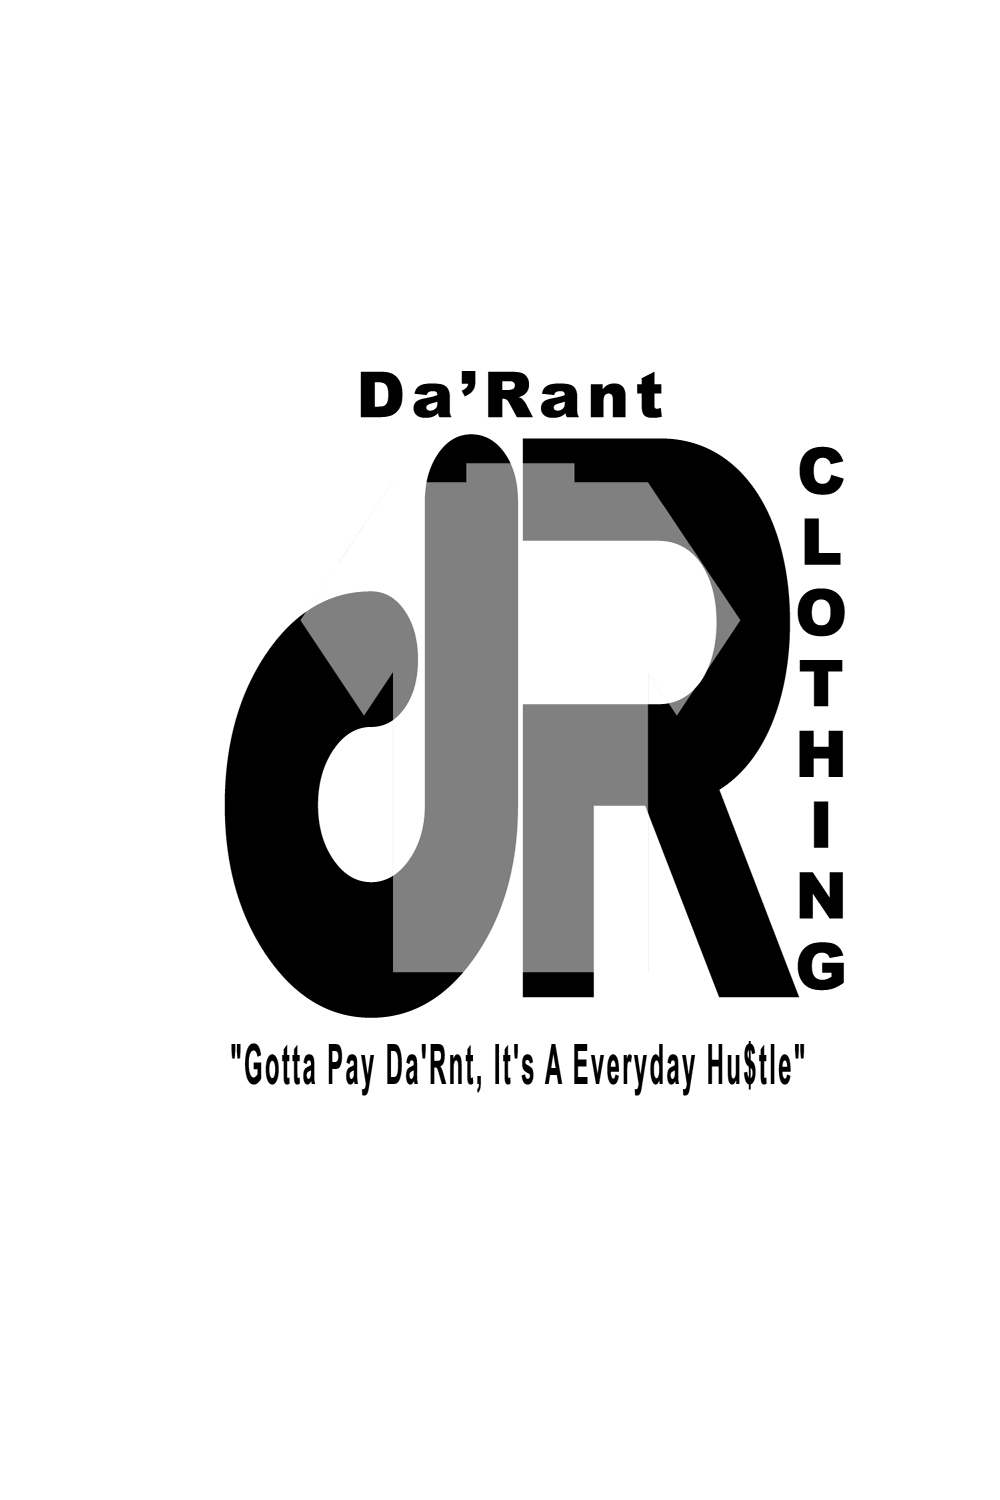 Da - Rant Clothing - TShirt Print Design pinterest preview image.